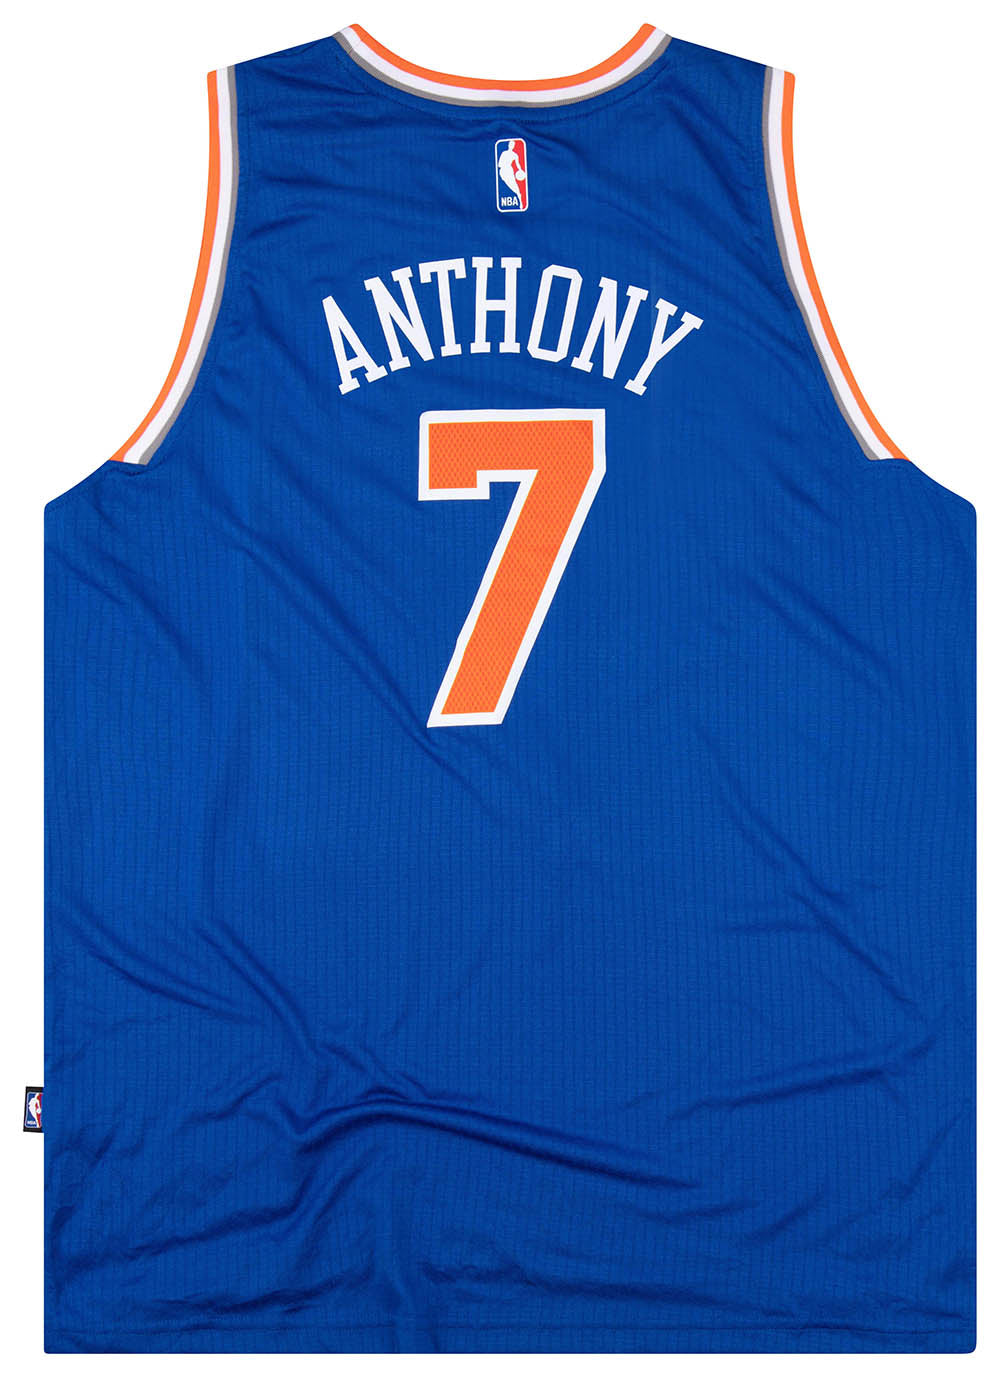 *NEW WITH TAGS* Carmelo Anthony Knicks Alternate Swingman Jersey XXL 2014  for Sale in Woodbridge Township, NJ - OfferUp